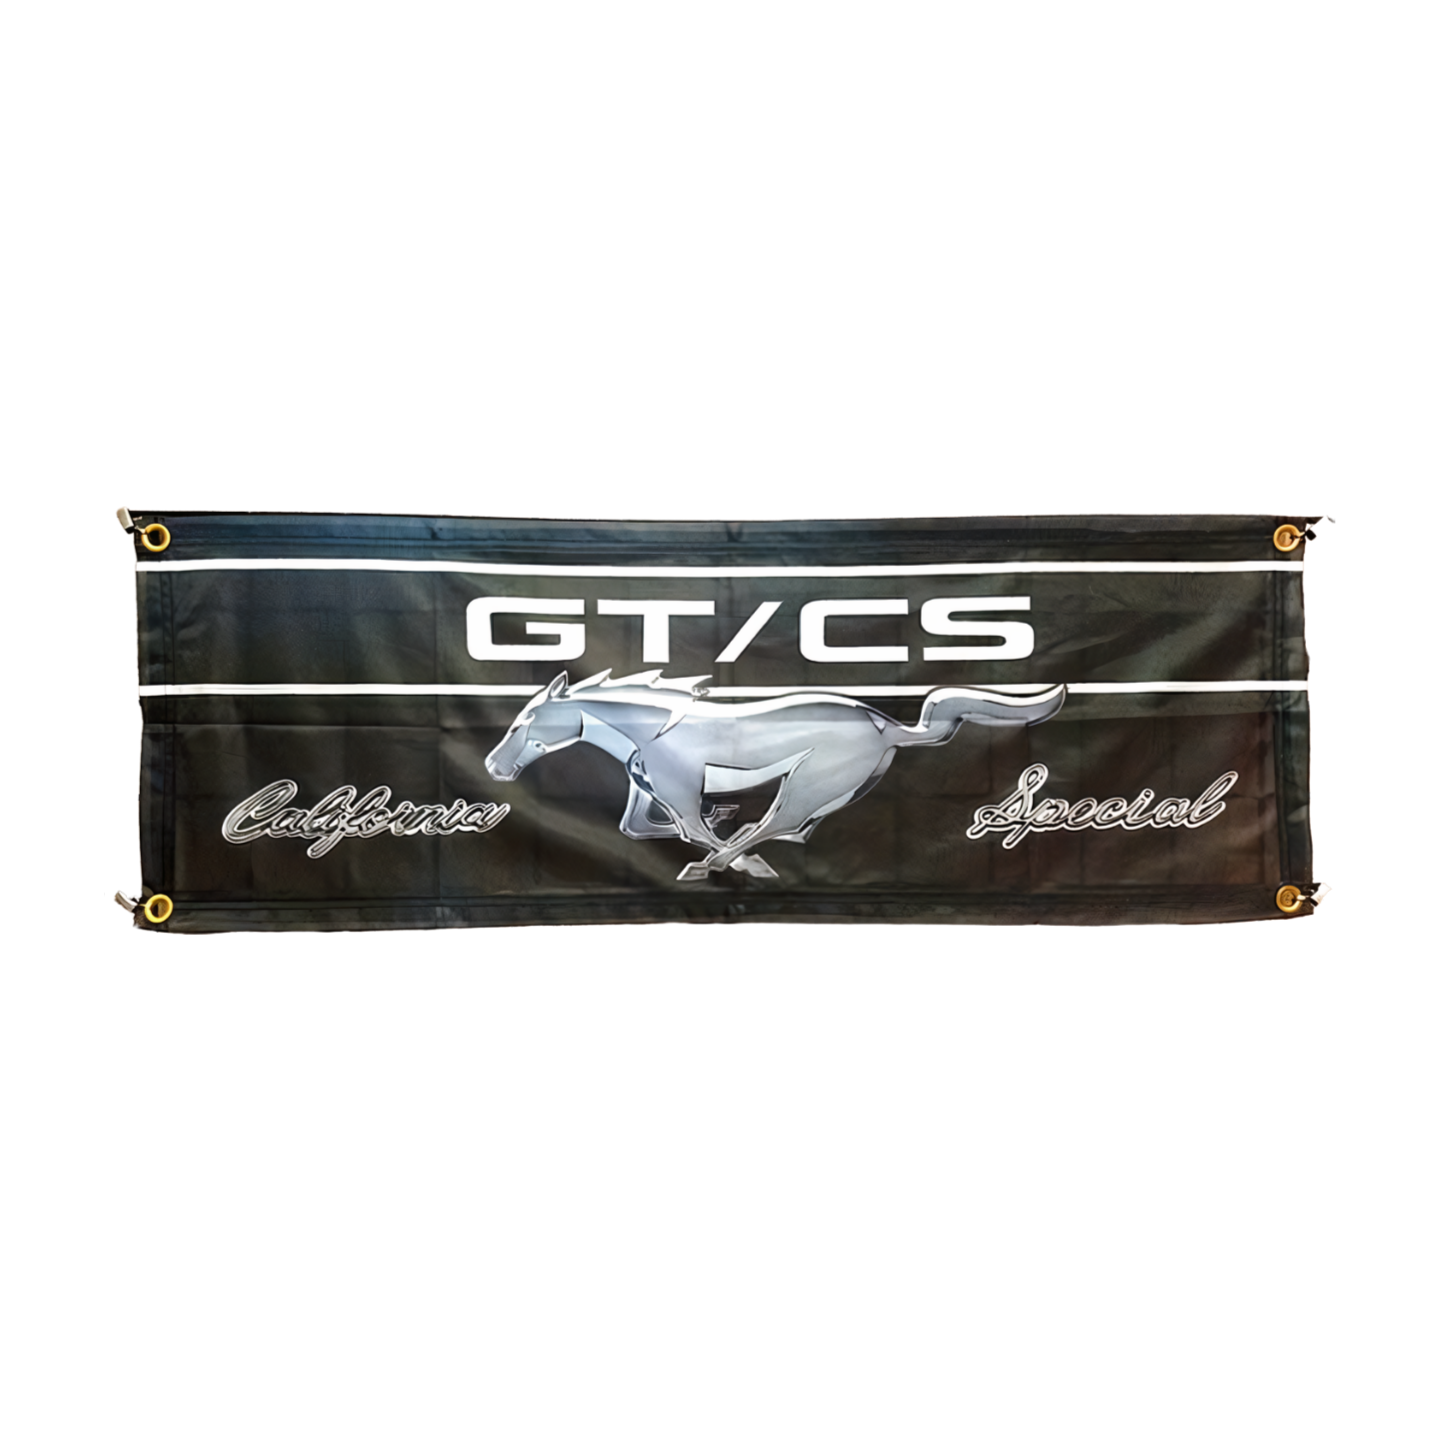 Mustang GT California Special (GT/CS) Fabric Banner